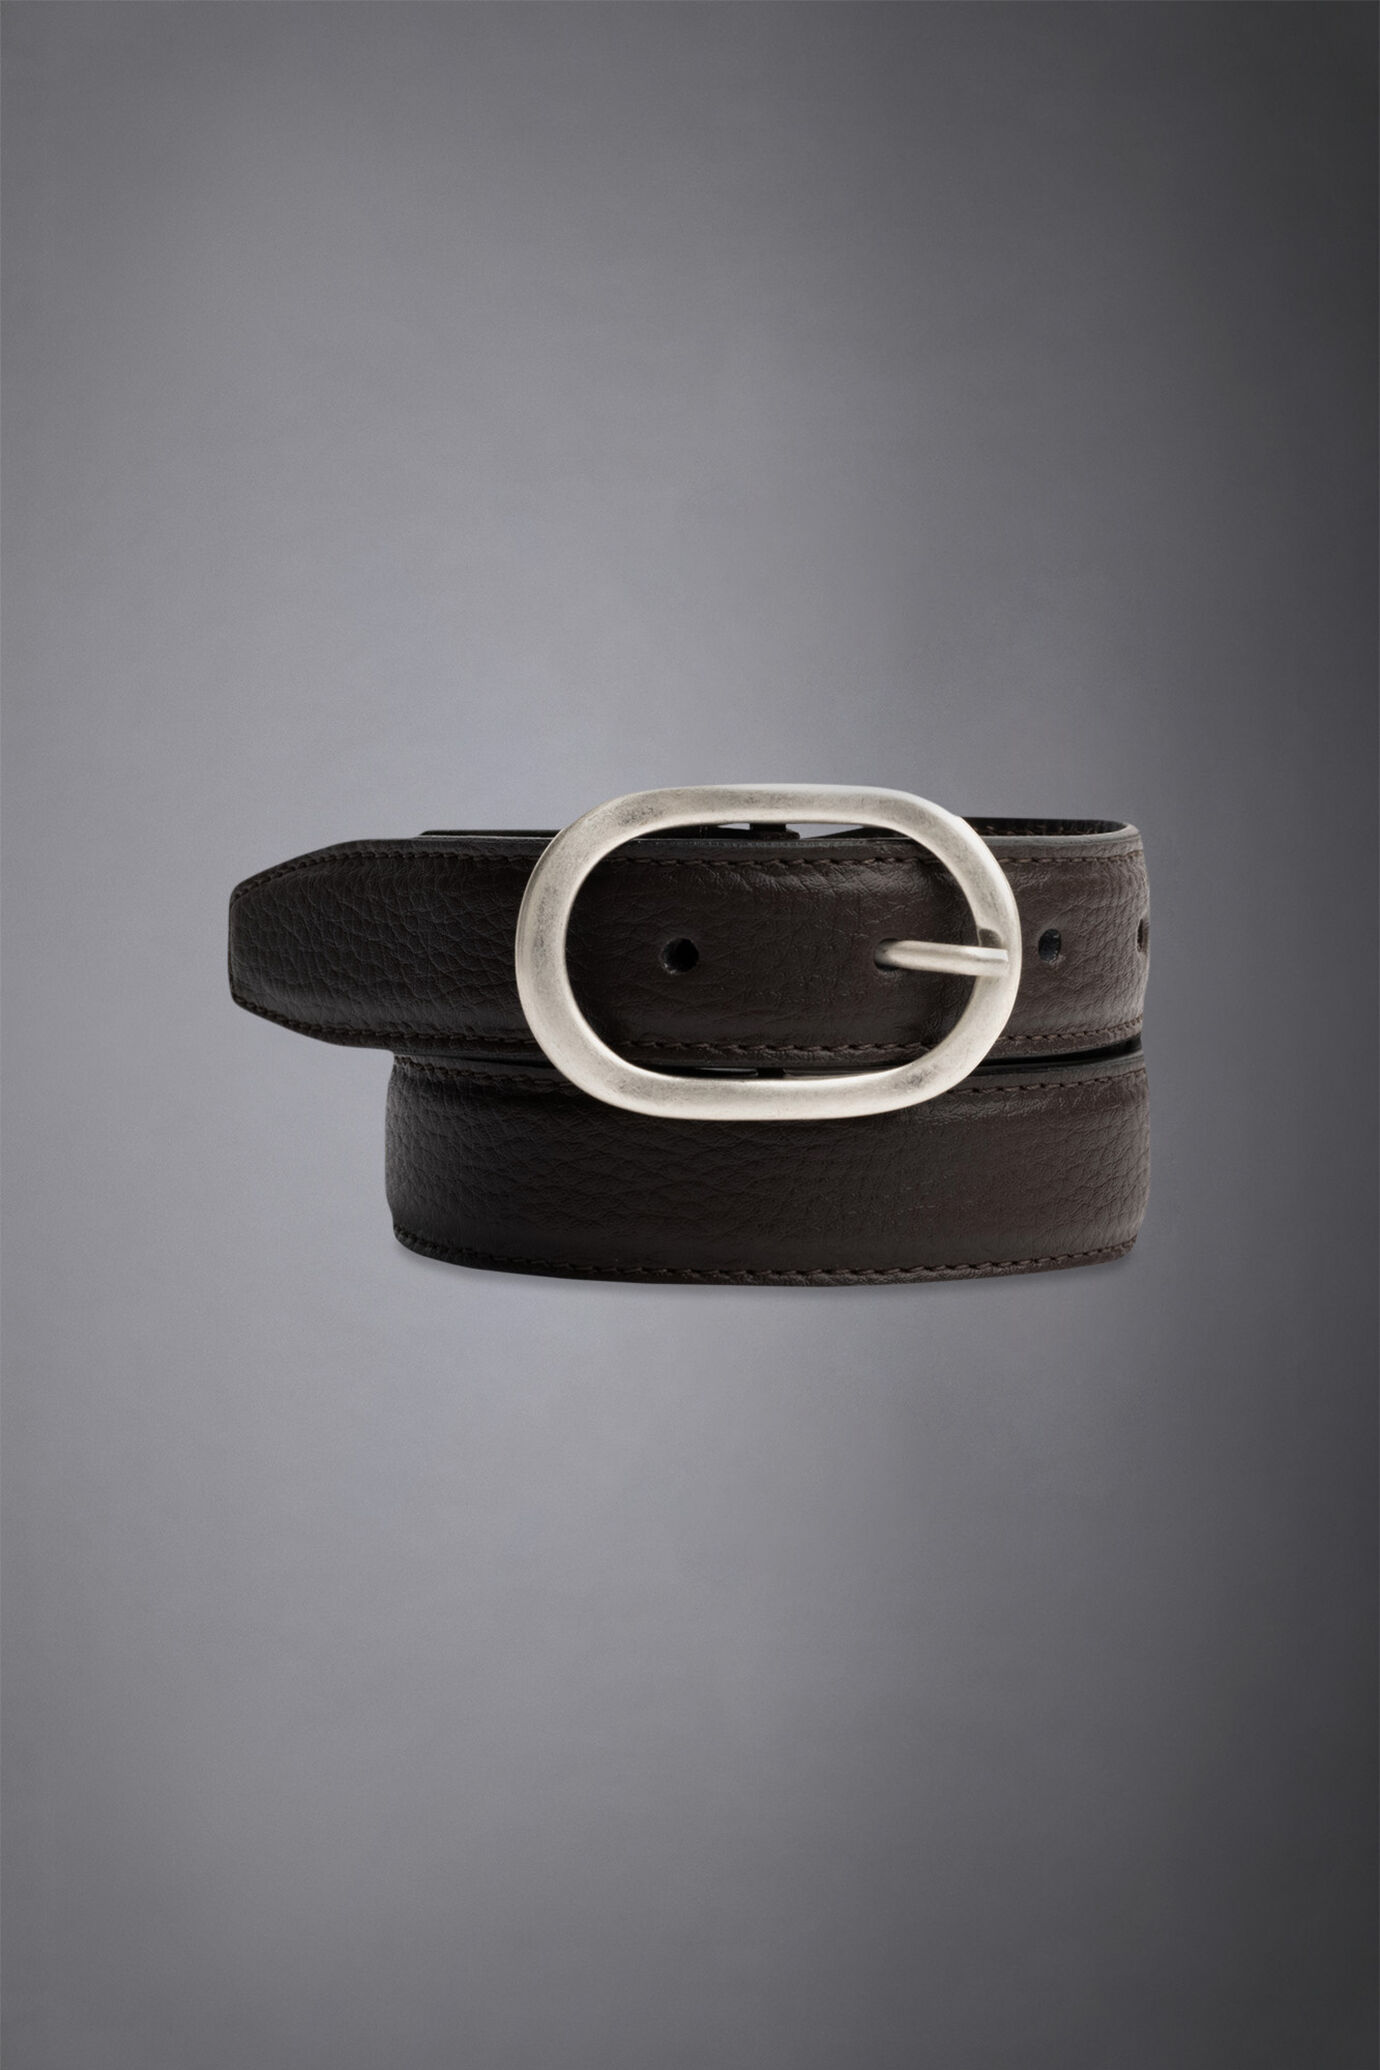 Men's belt covered in suede